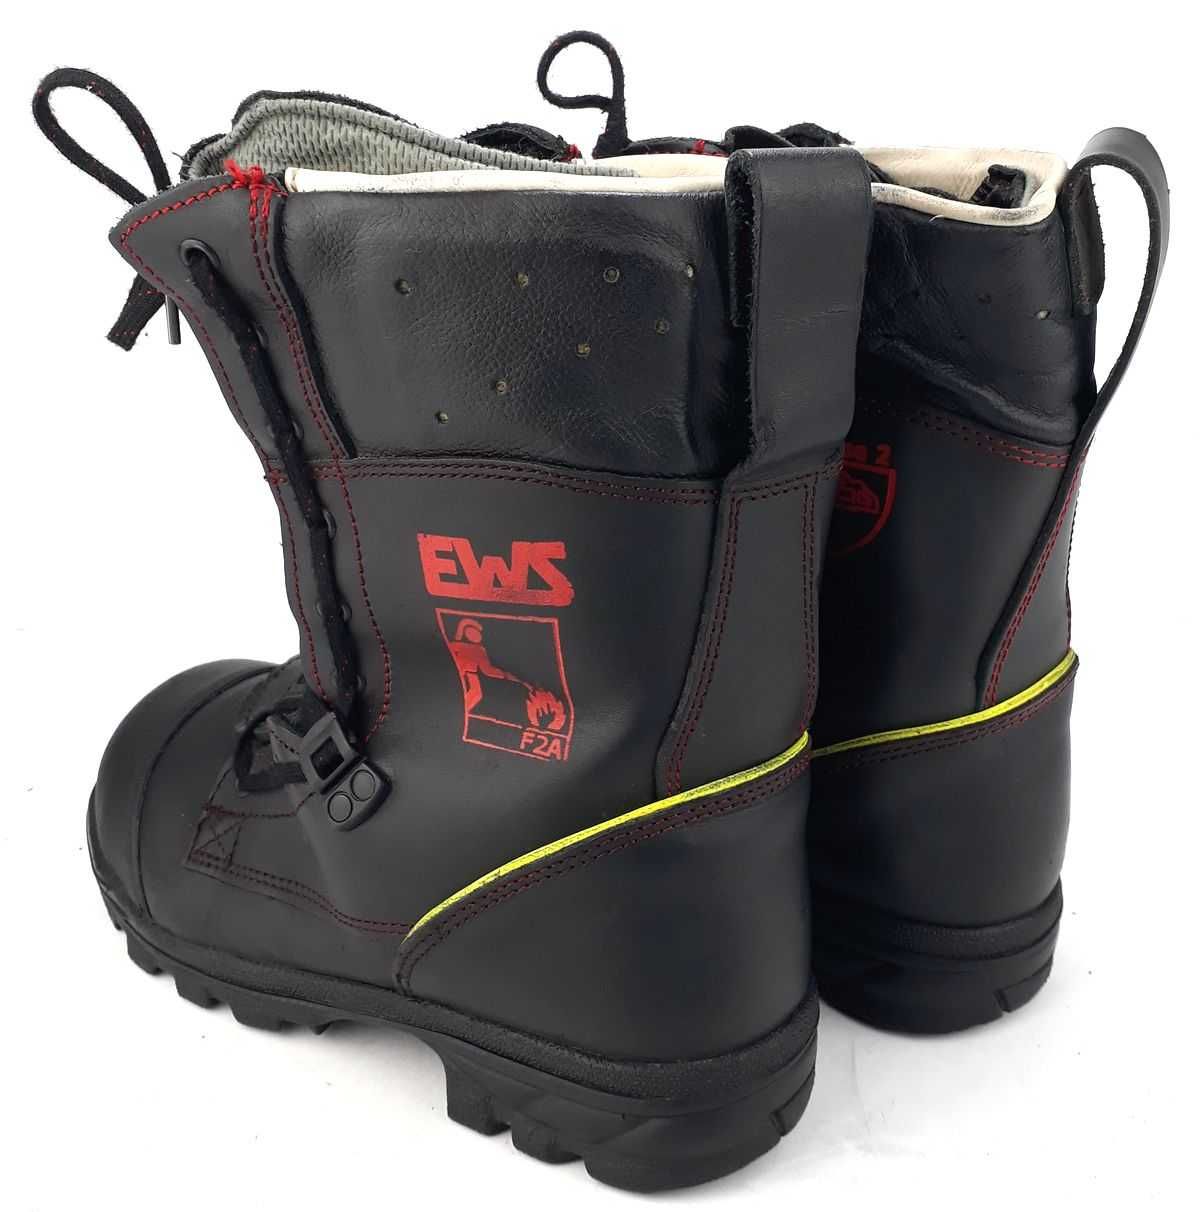 Buty strażackie EWS PROFI (9205-9) z membraną - super stan - rozm. 42